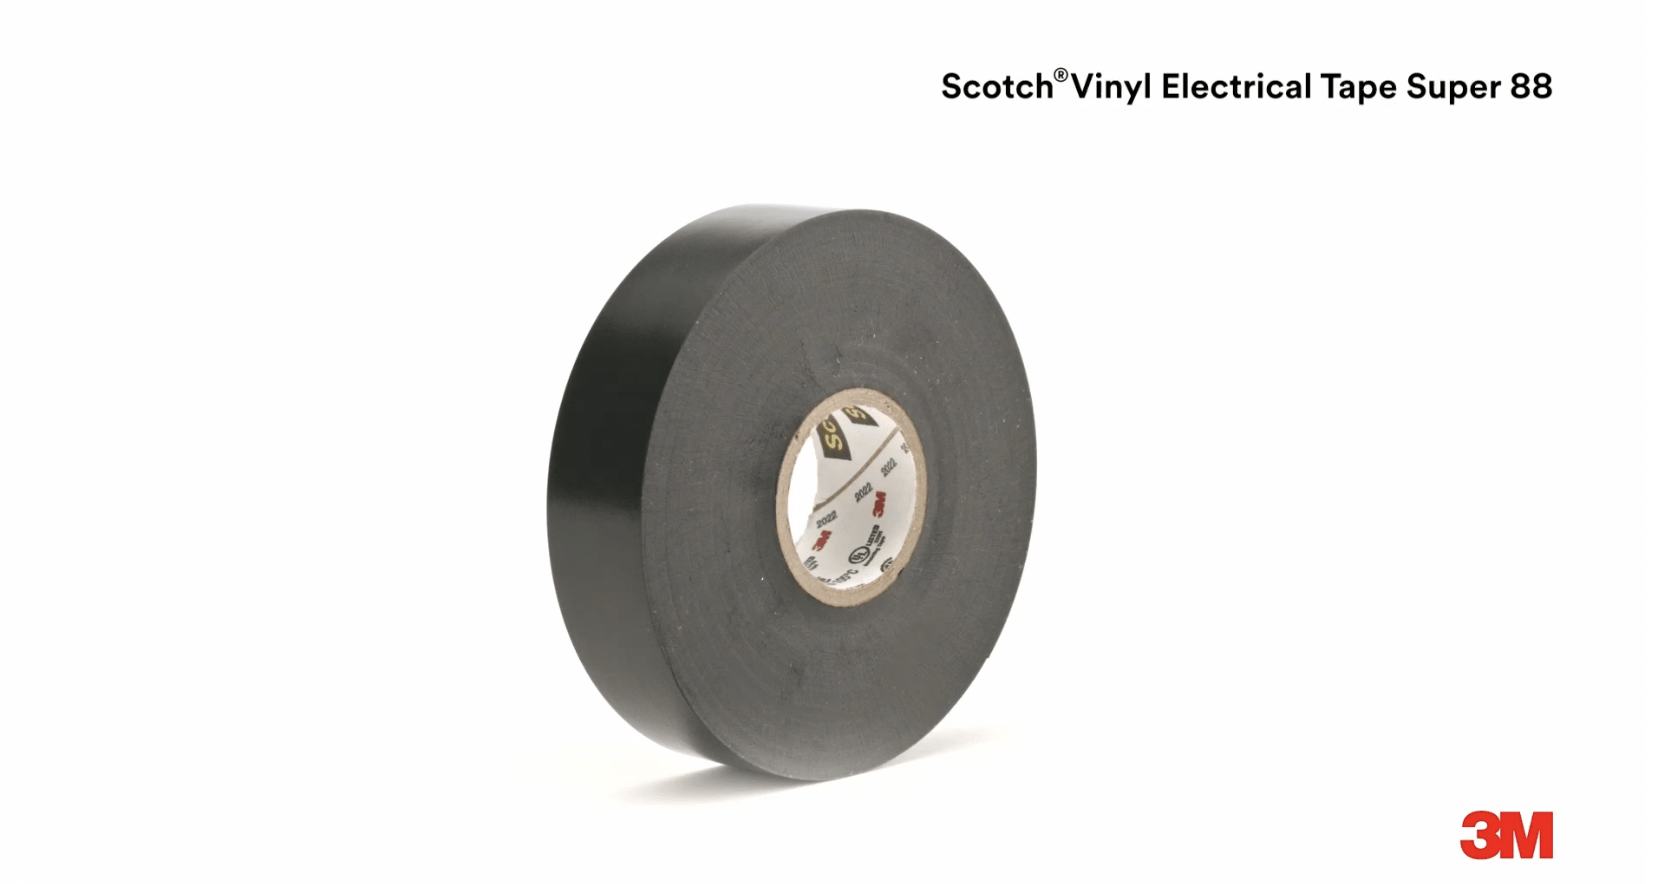 Pack-n-Tape  3M 88 Scotch Premium Vinyl Electrical Tape-Super-3/4x44FT,  3/4 in x 44 ft (19 mm x 13,4 m), 100 per case - Pack-n-Tape